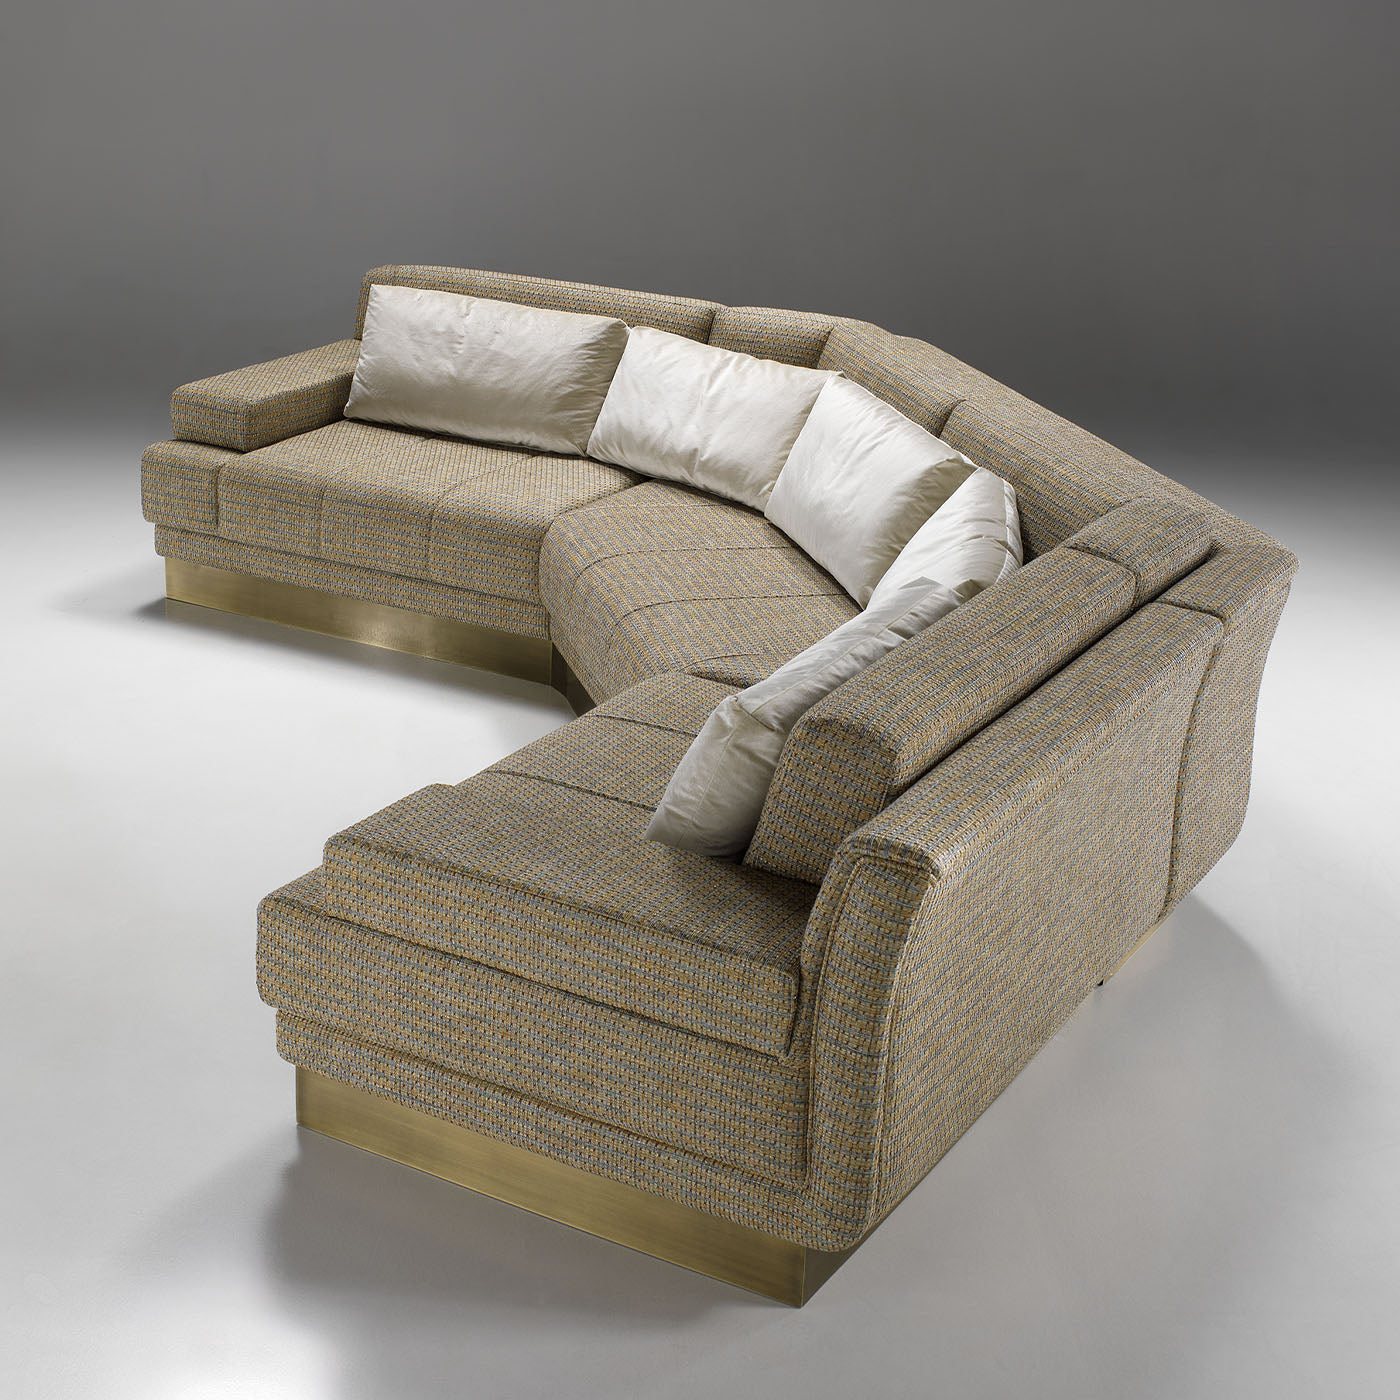 Boulevard Melange Brown & Gray Modular Sofa - Vue alternative 1